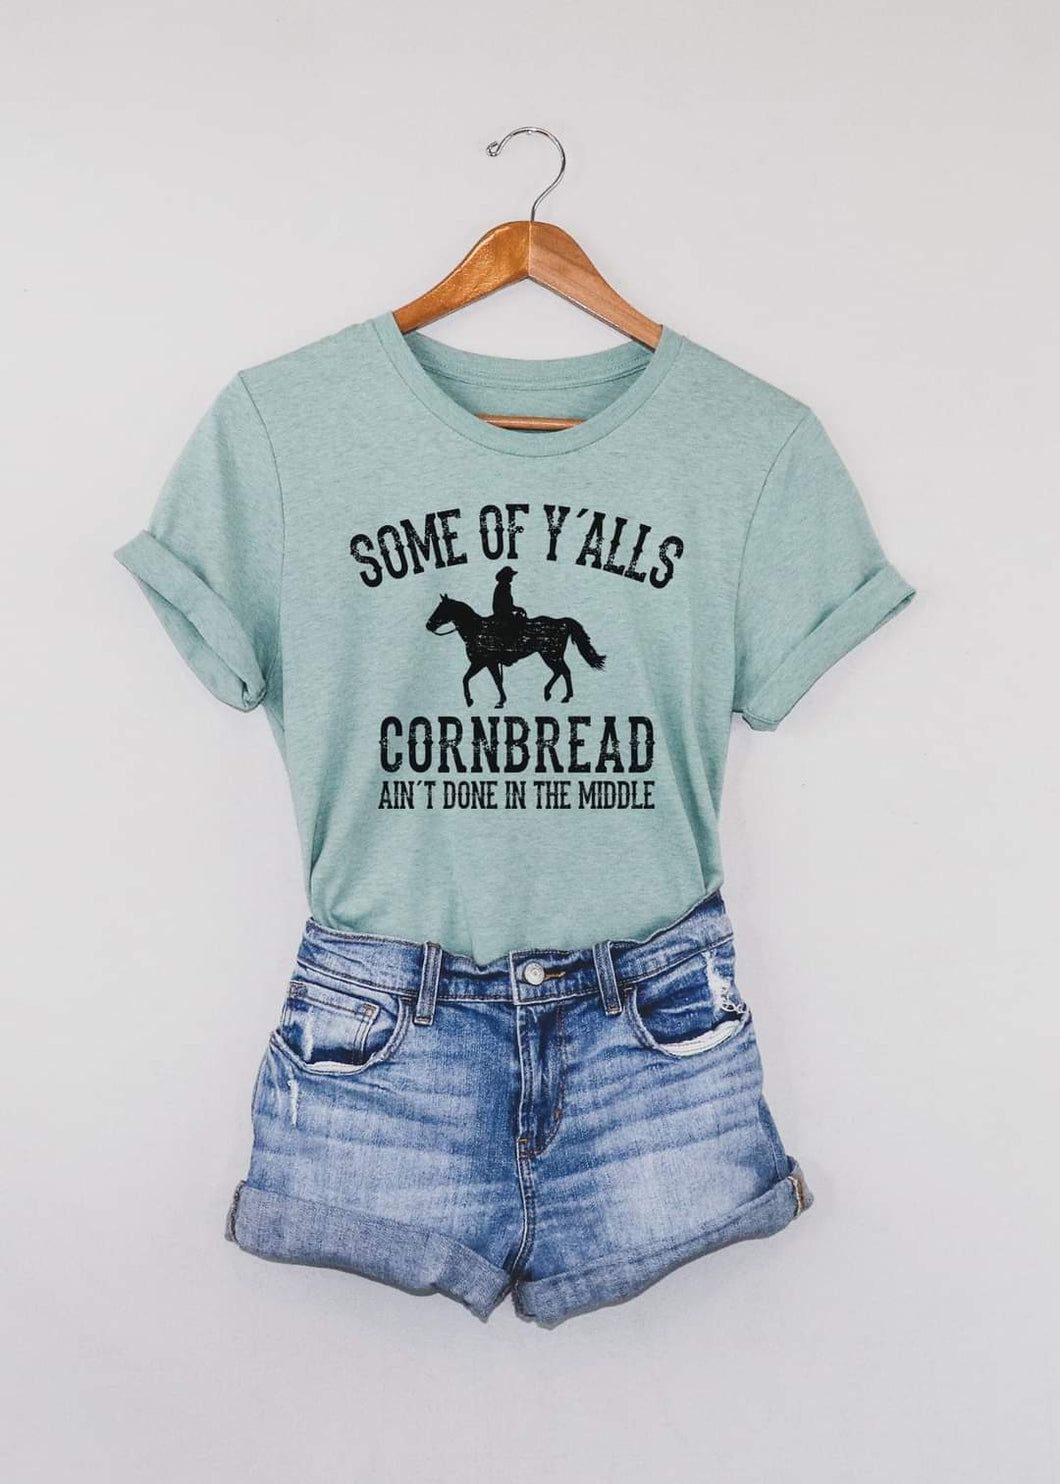 Cornbread Shirt